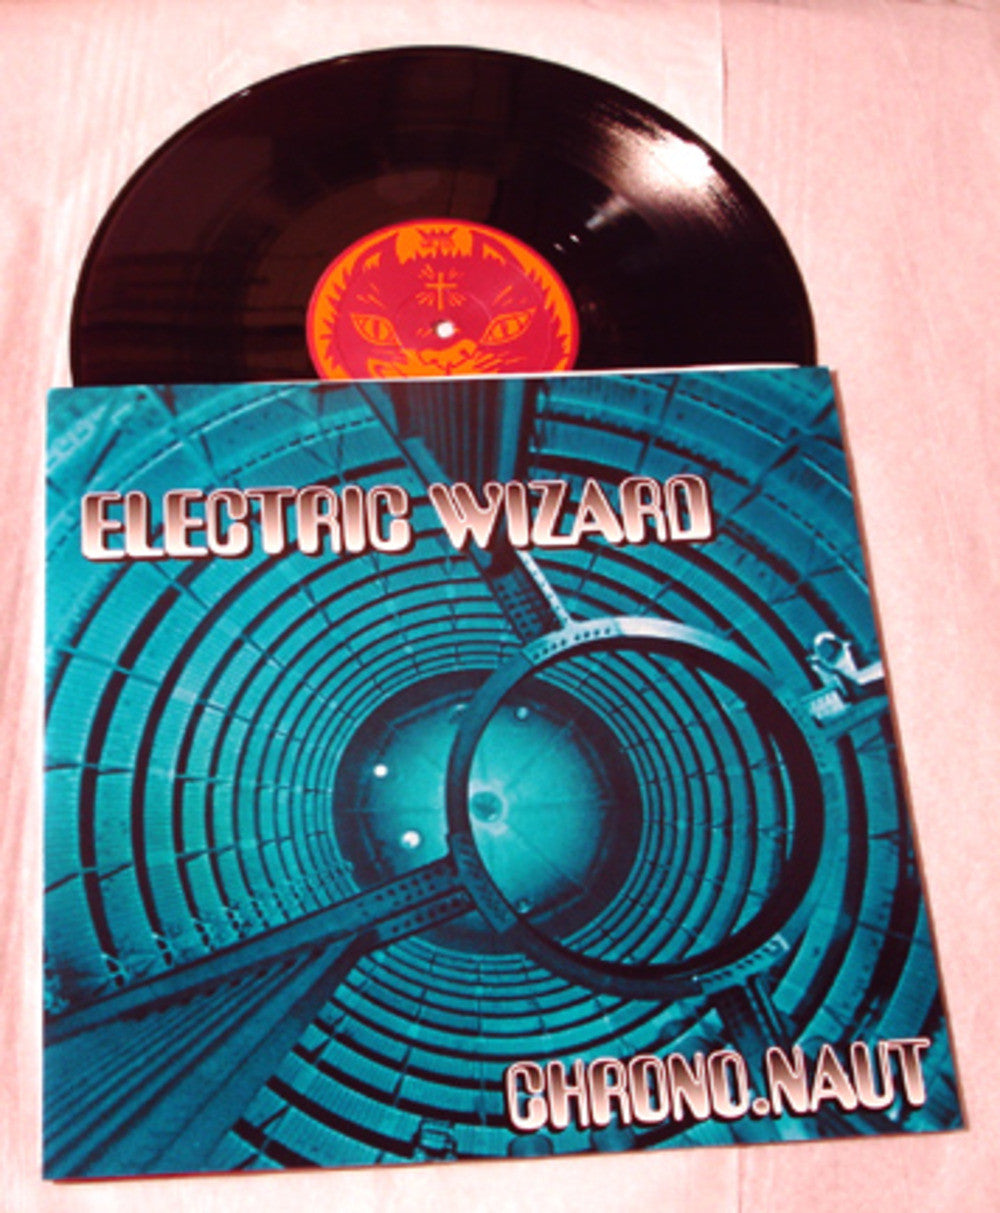 Electric Wizard "Chrono.Naut" 1997 Colored Vinyl Art By Kozik